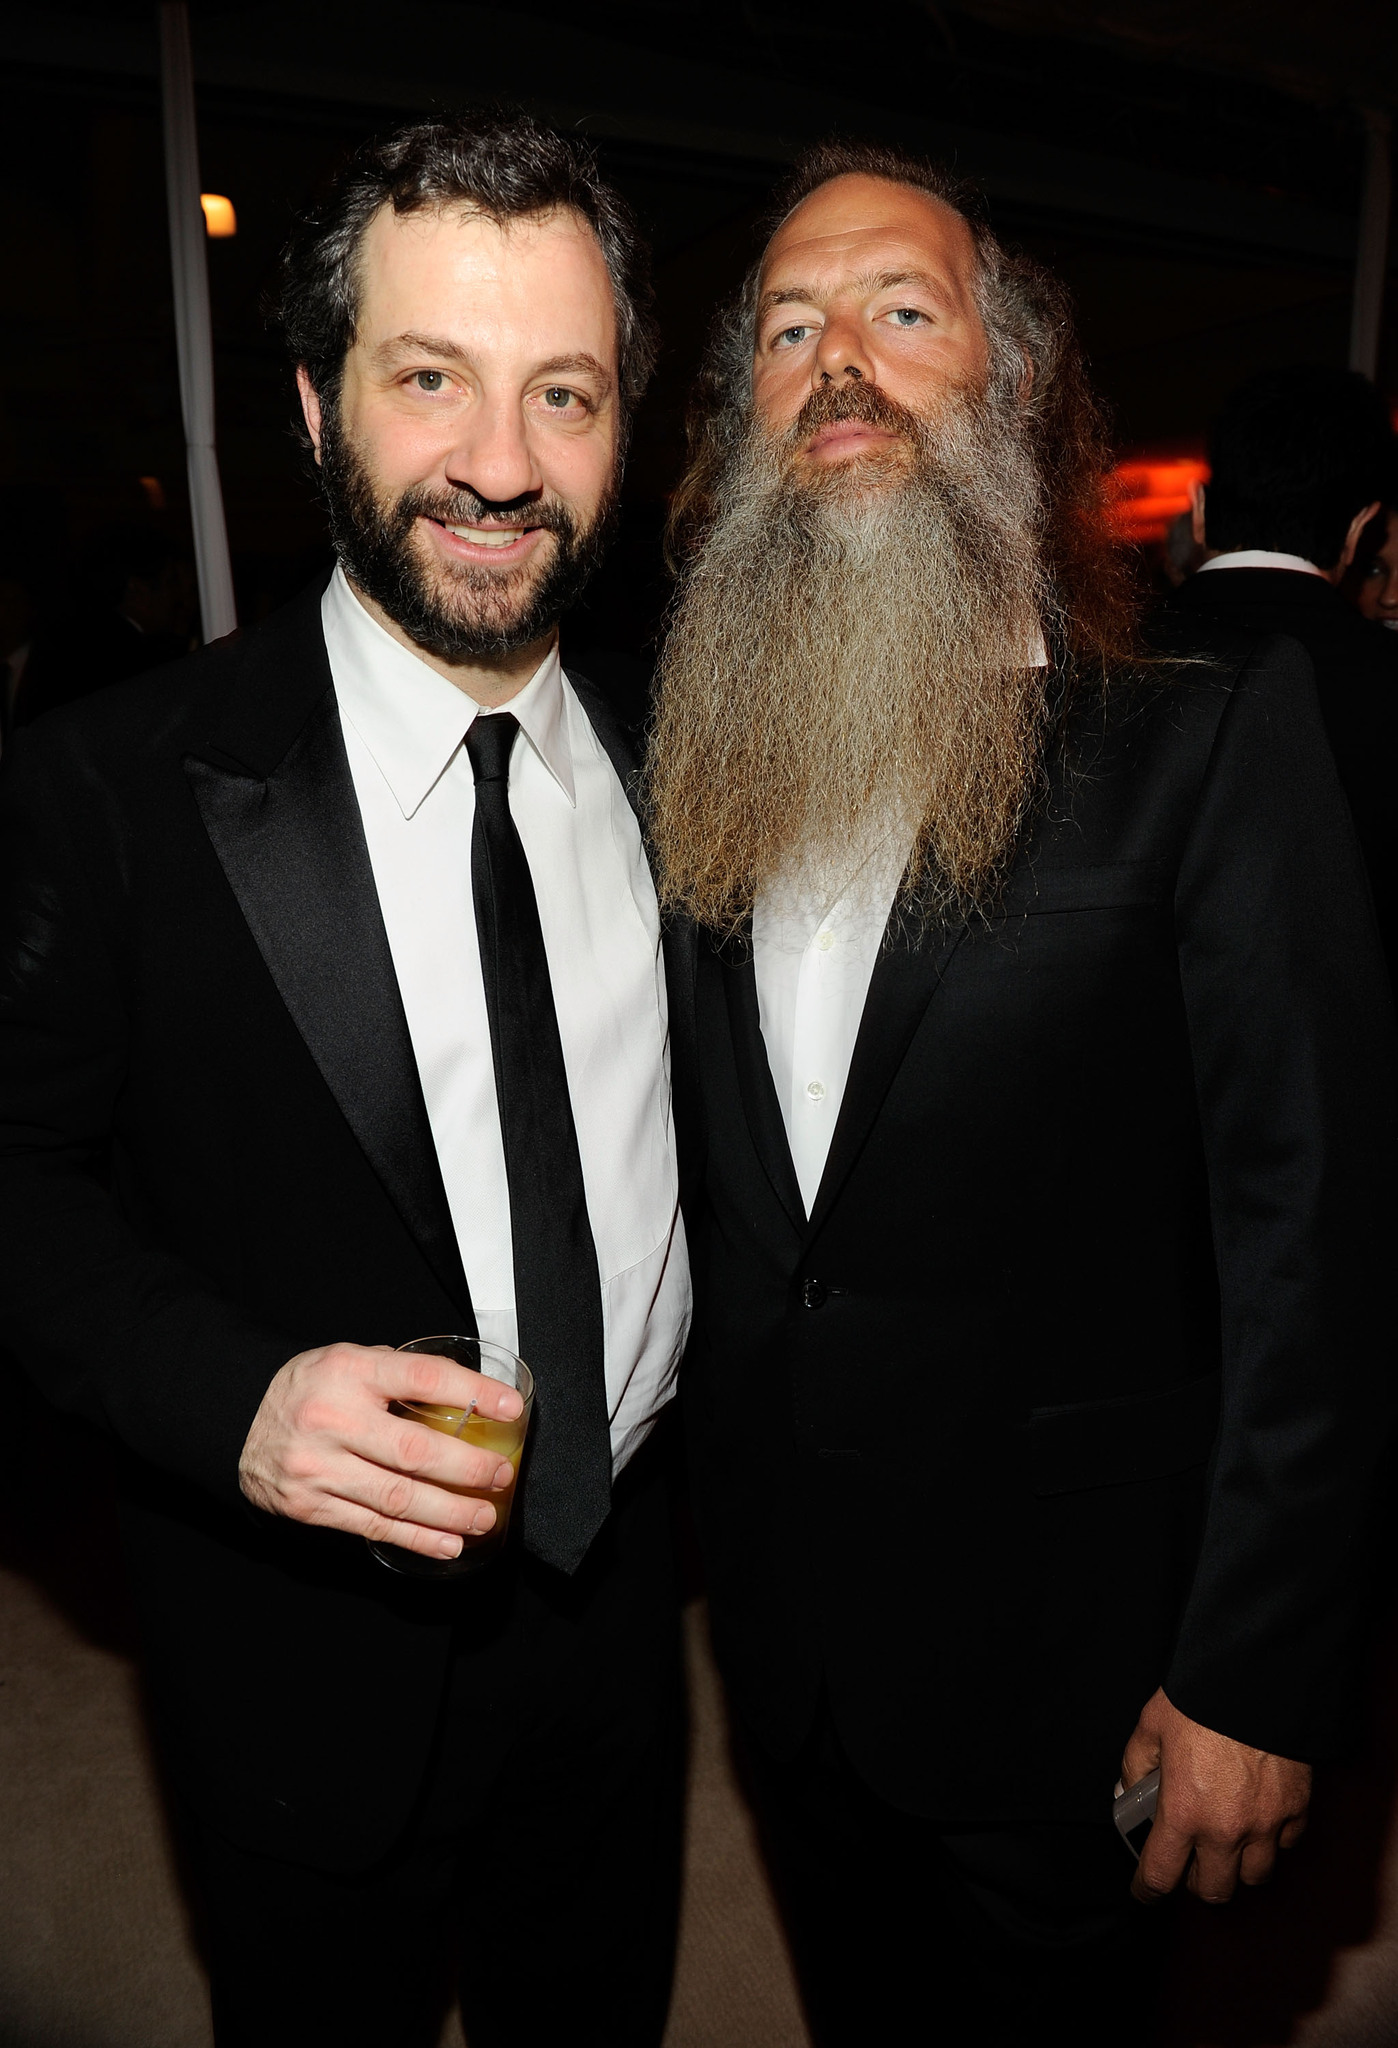 Rick Rubin and Judd Apatow